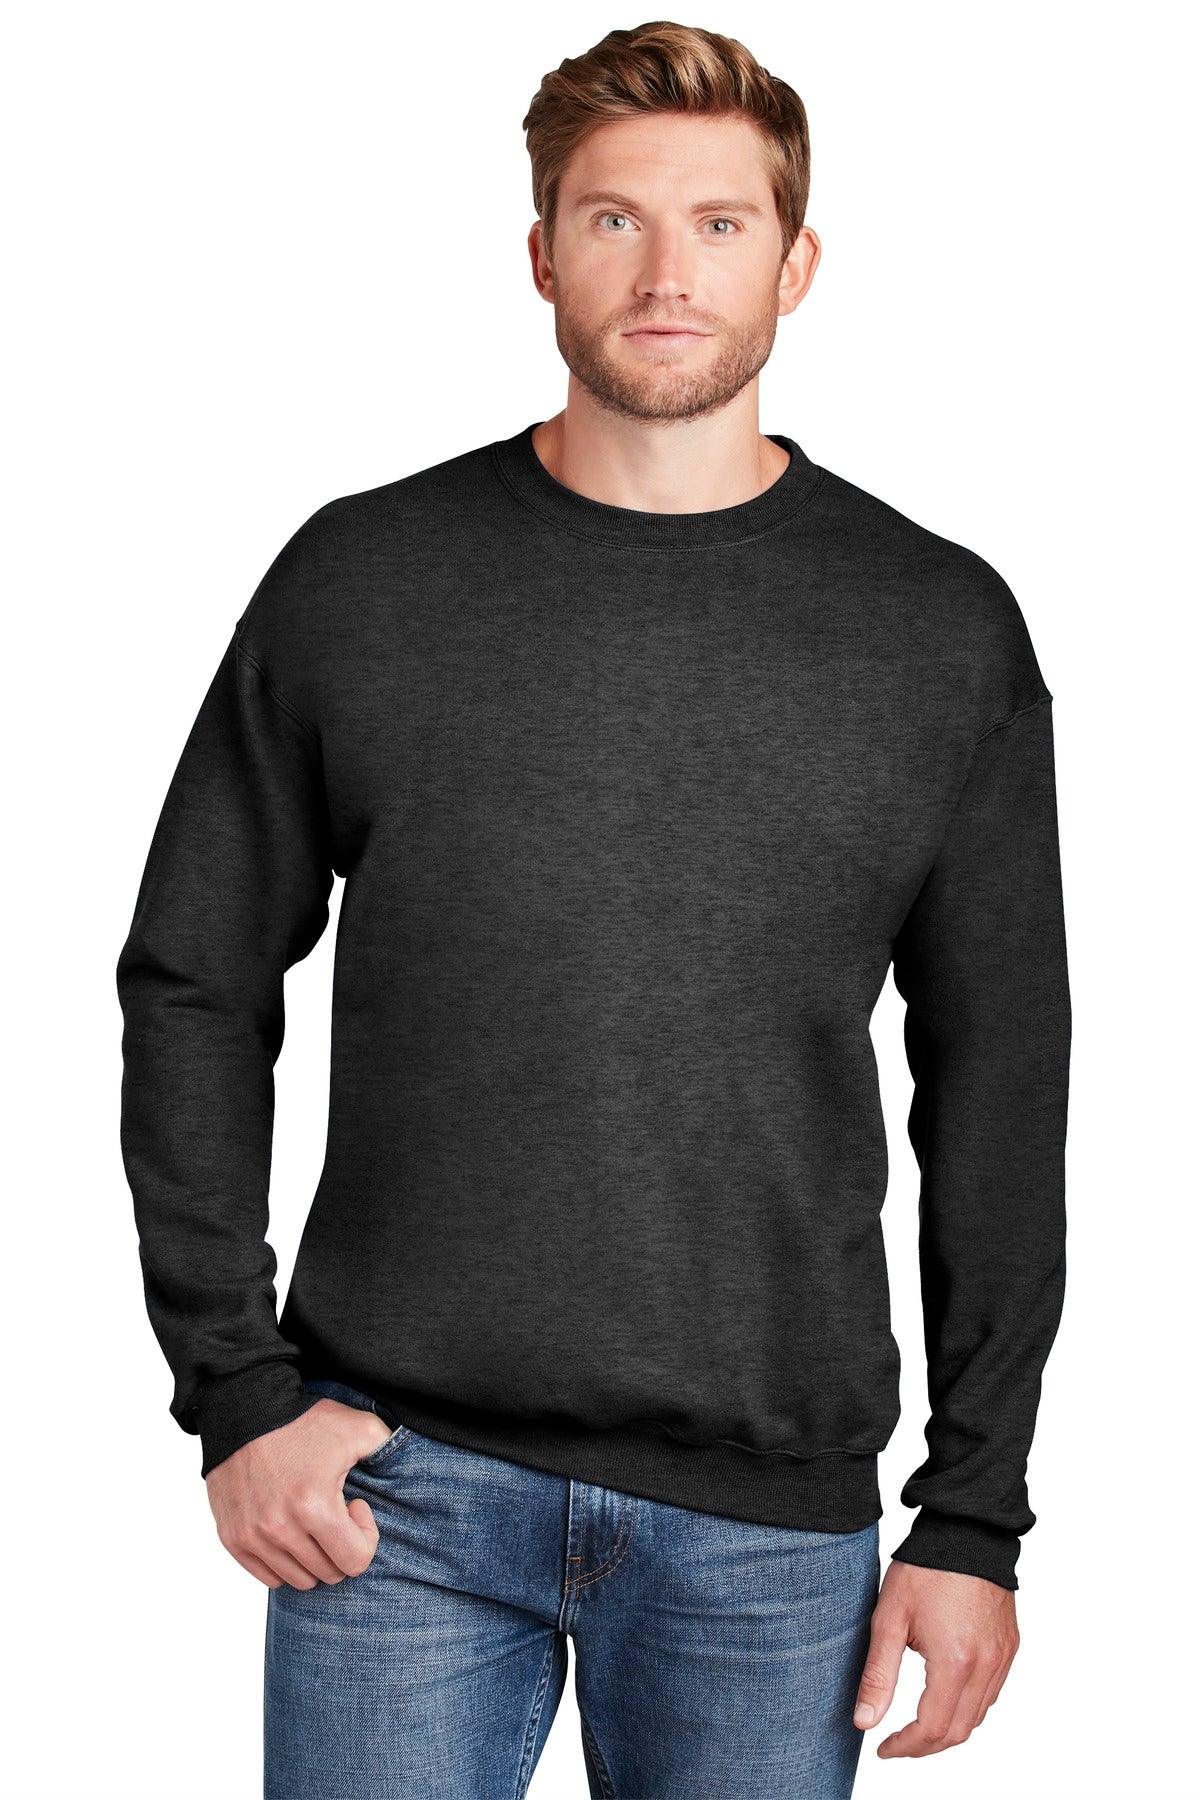 Hanes Ultimate Cotton - Crewneck Sweatshirt. F260 - Dresses Max